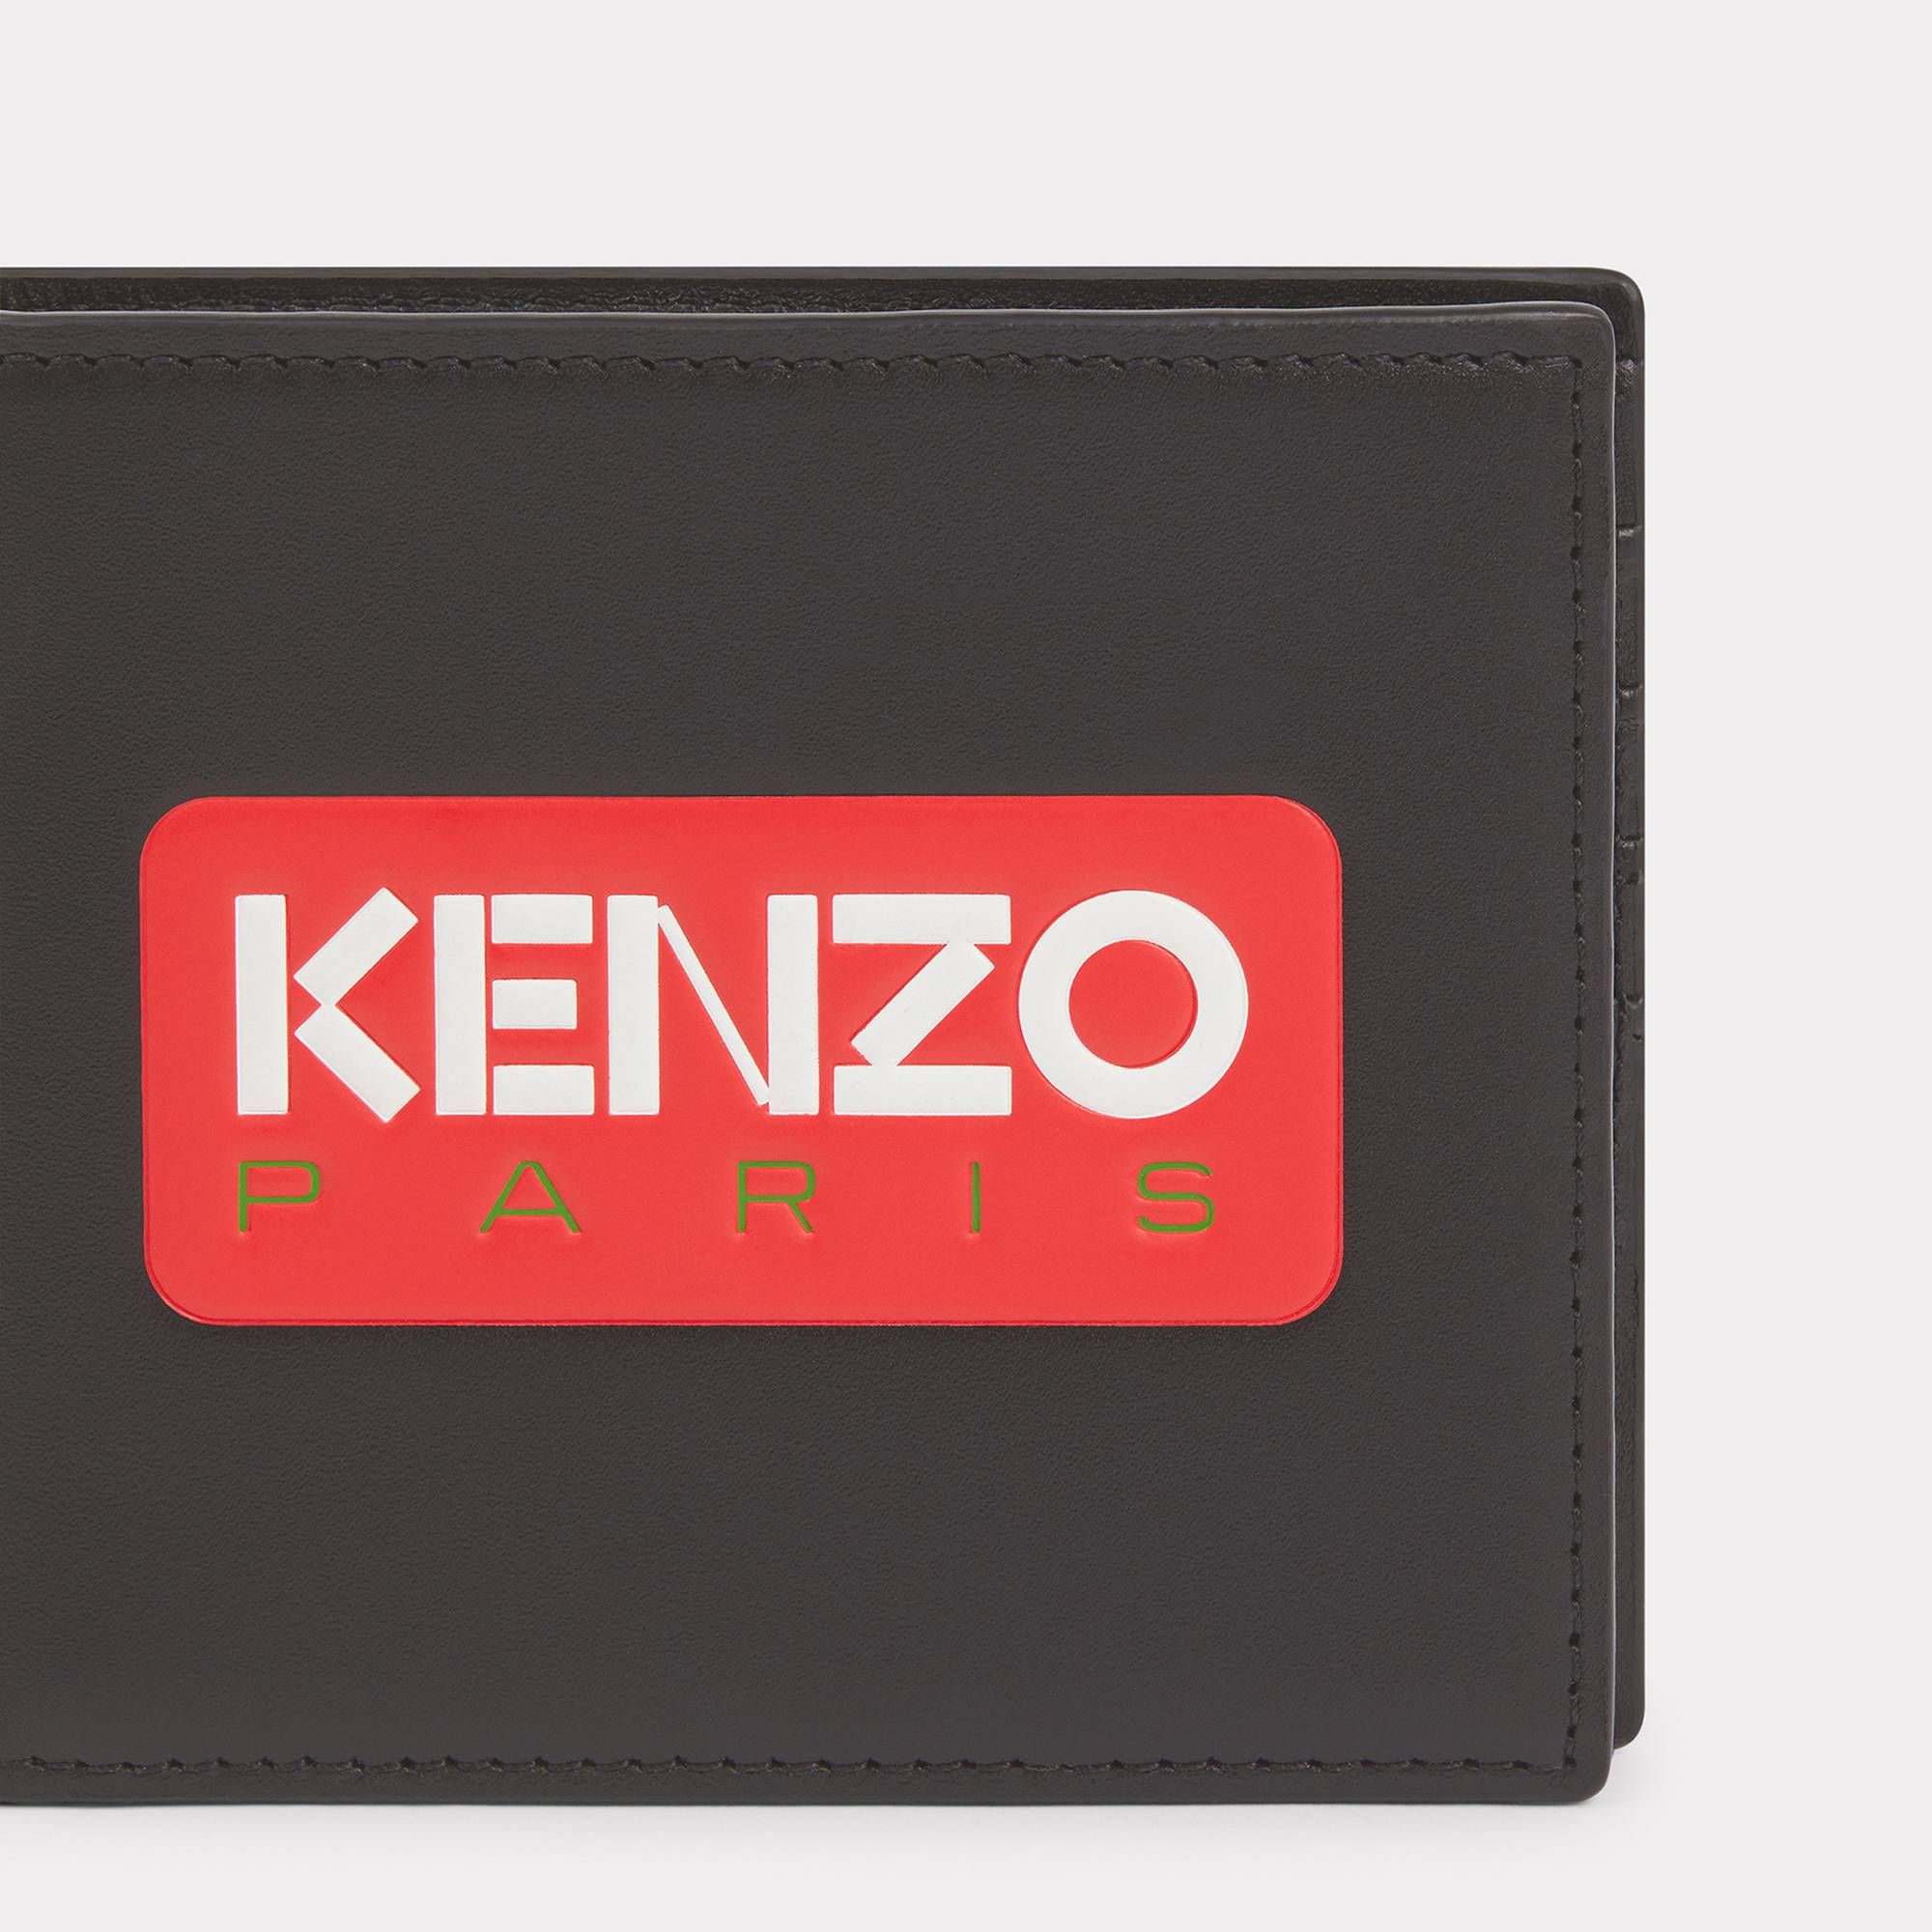  KENZO Paris Leather Wallet - Black 